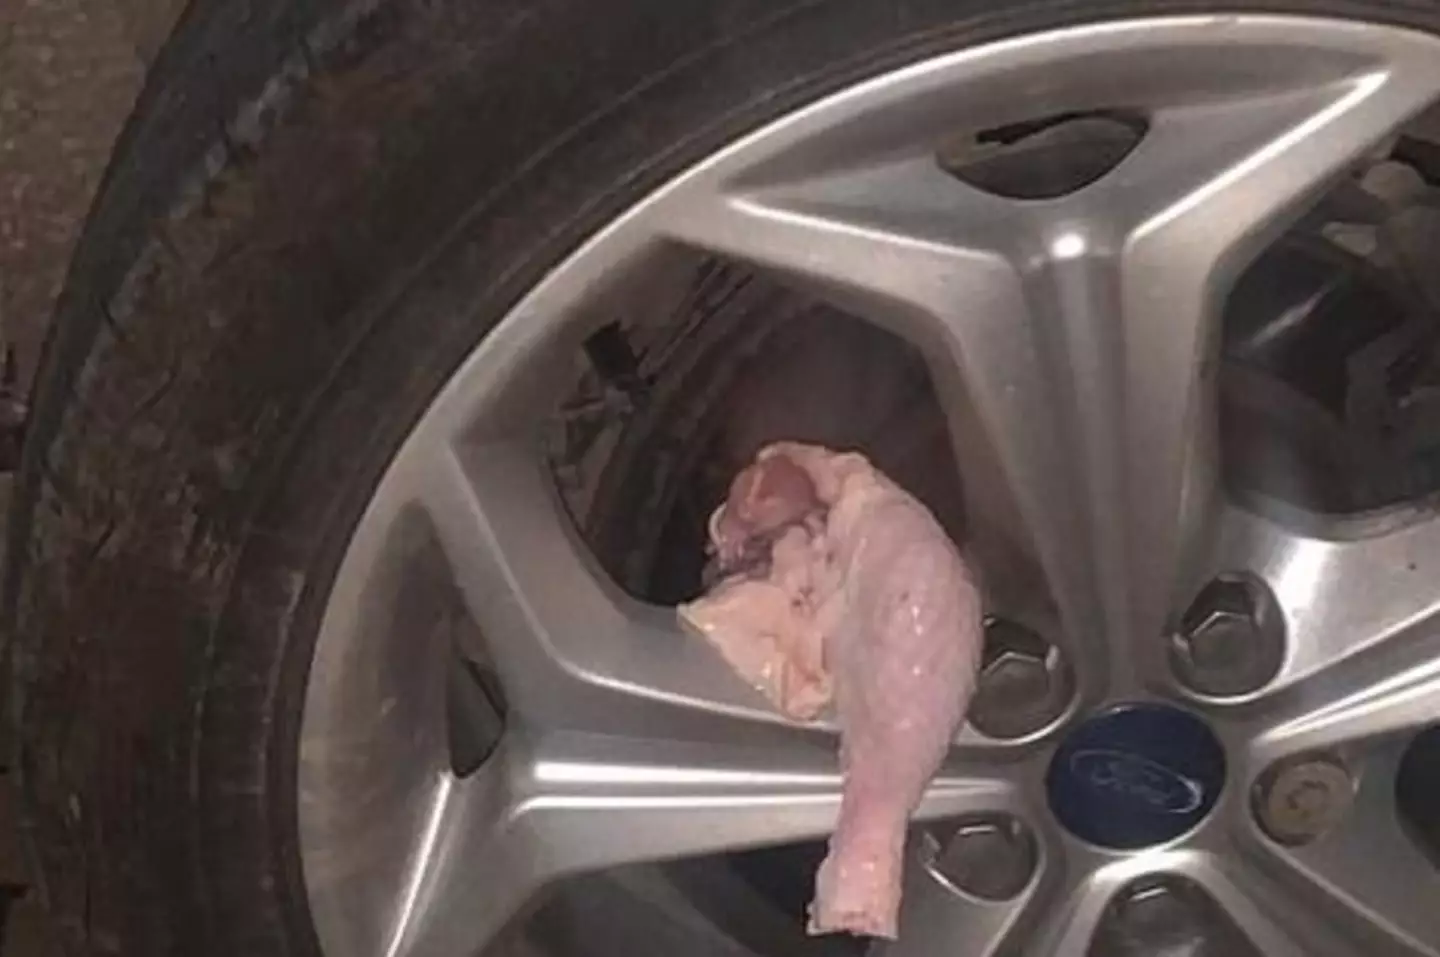 Chicken leg on a wheel